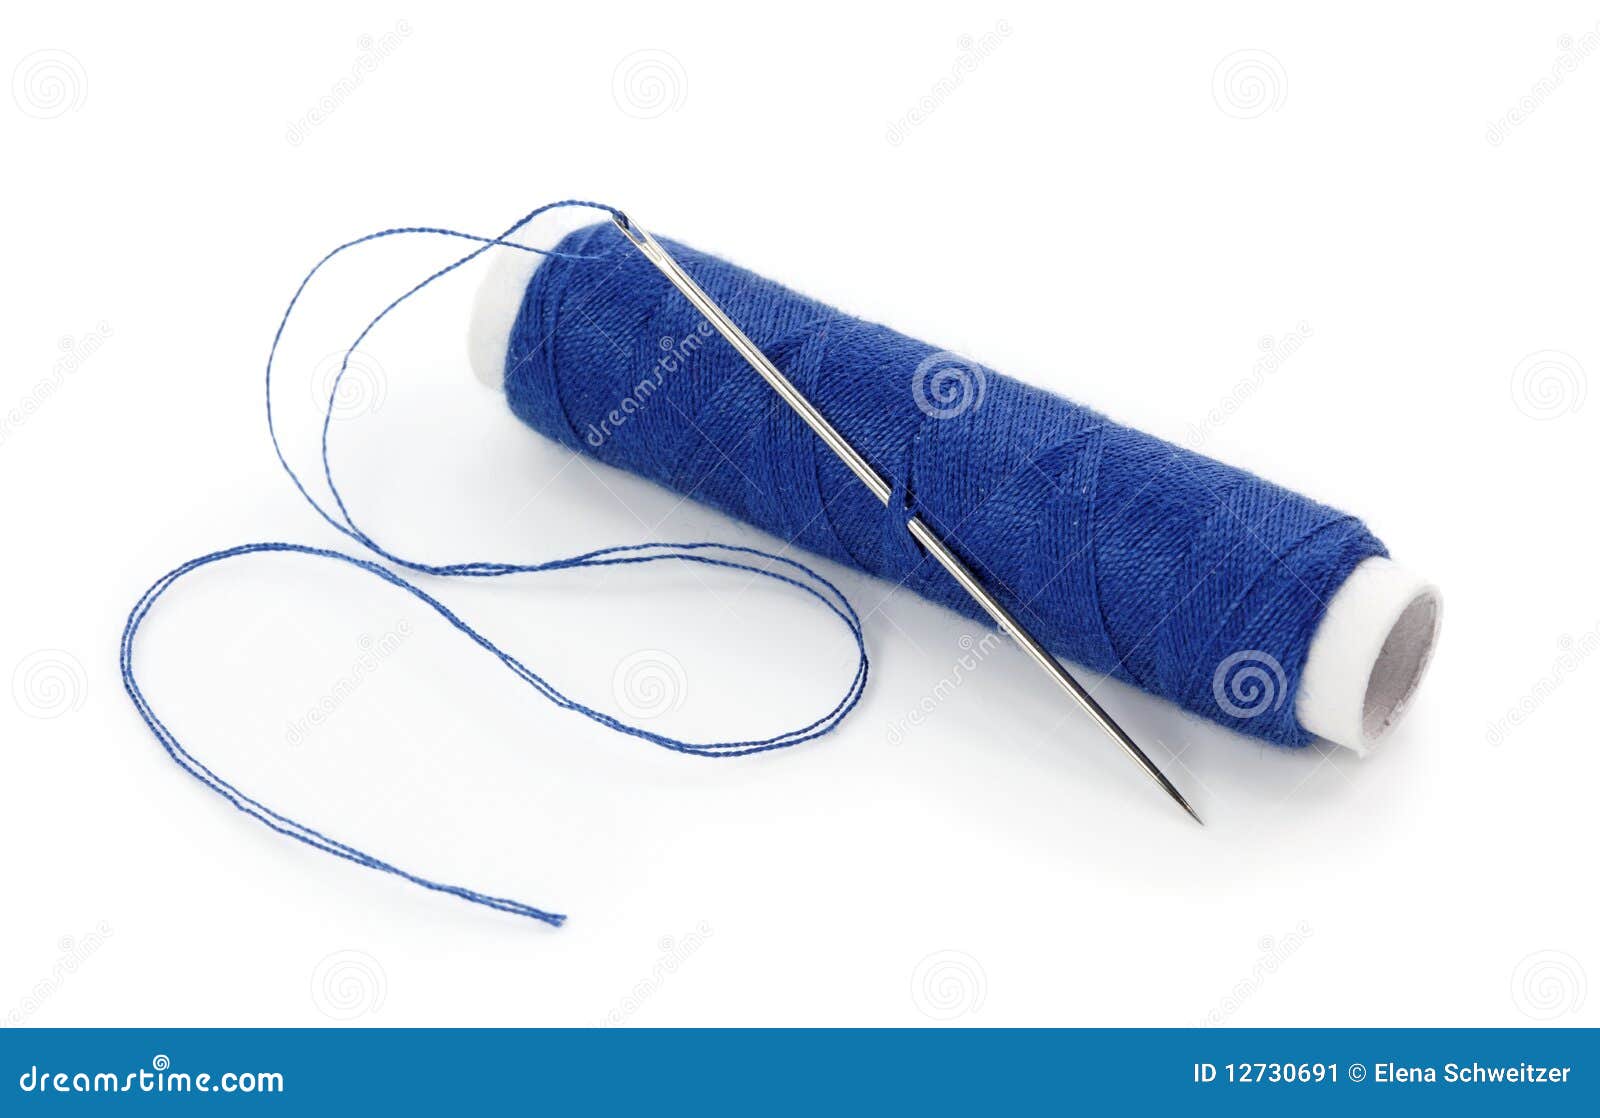 Blue thread stock image. Image of stuff, tailor, white - 12730691